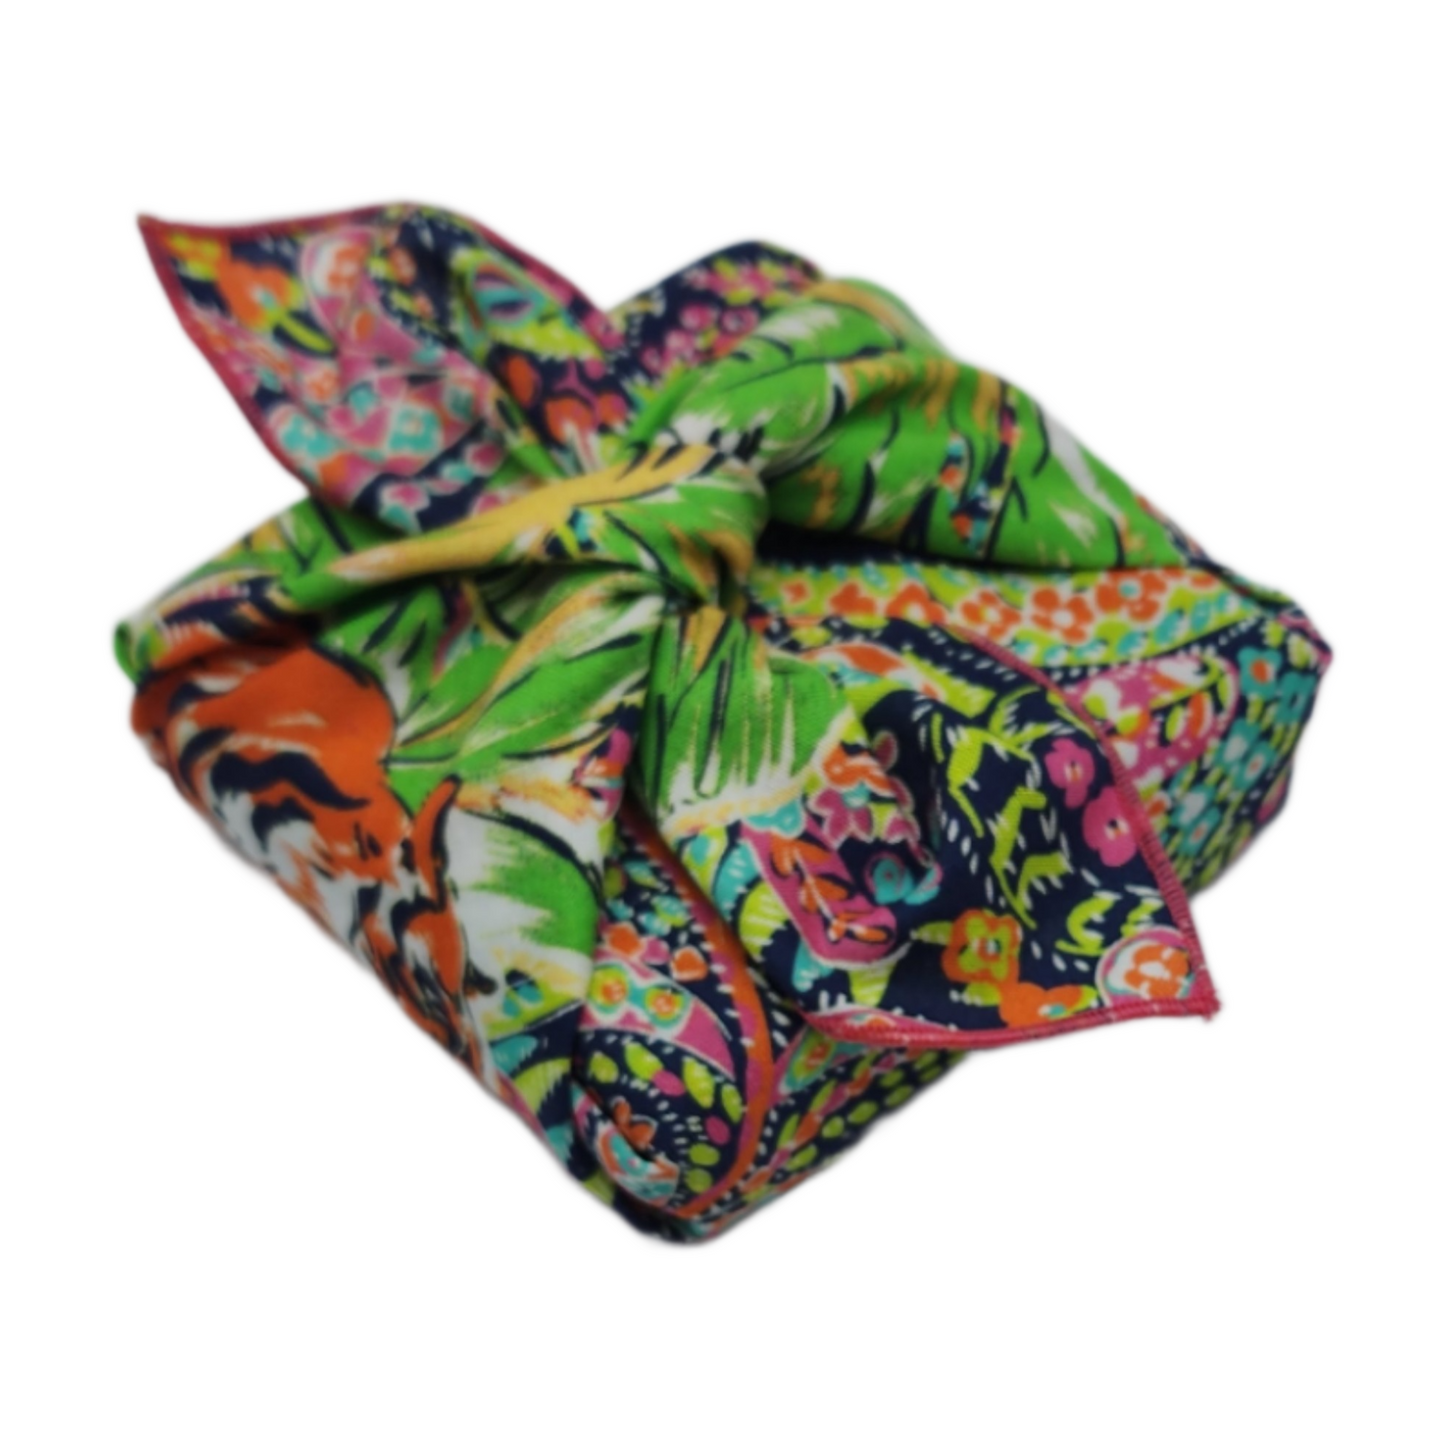 Furoshiki Fabric Gift Wrap - Palm Beach Paisley